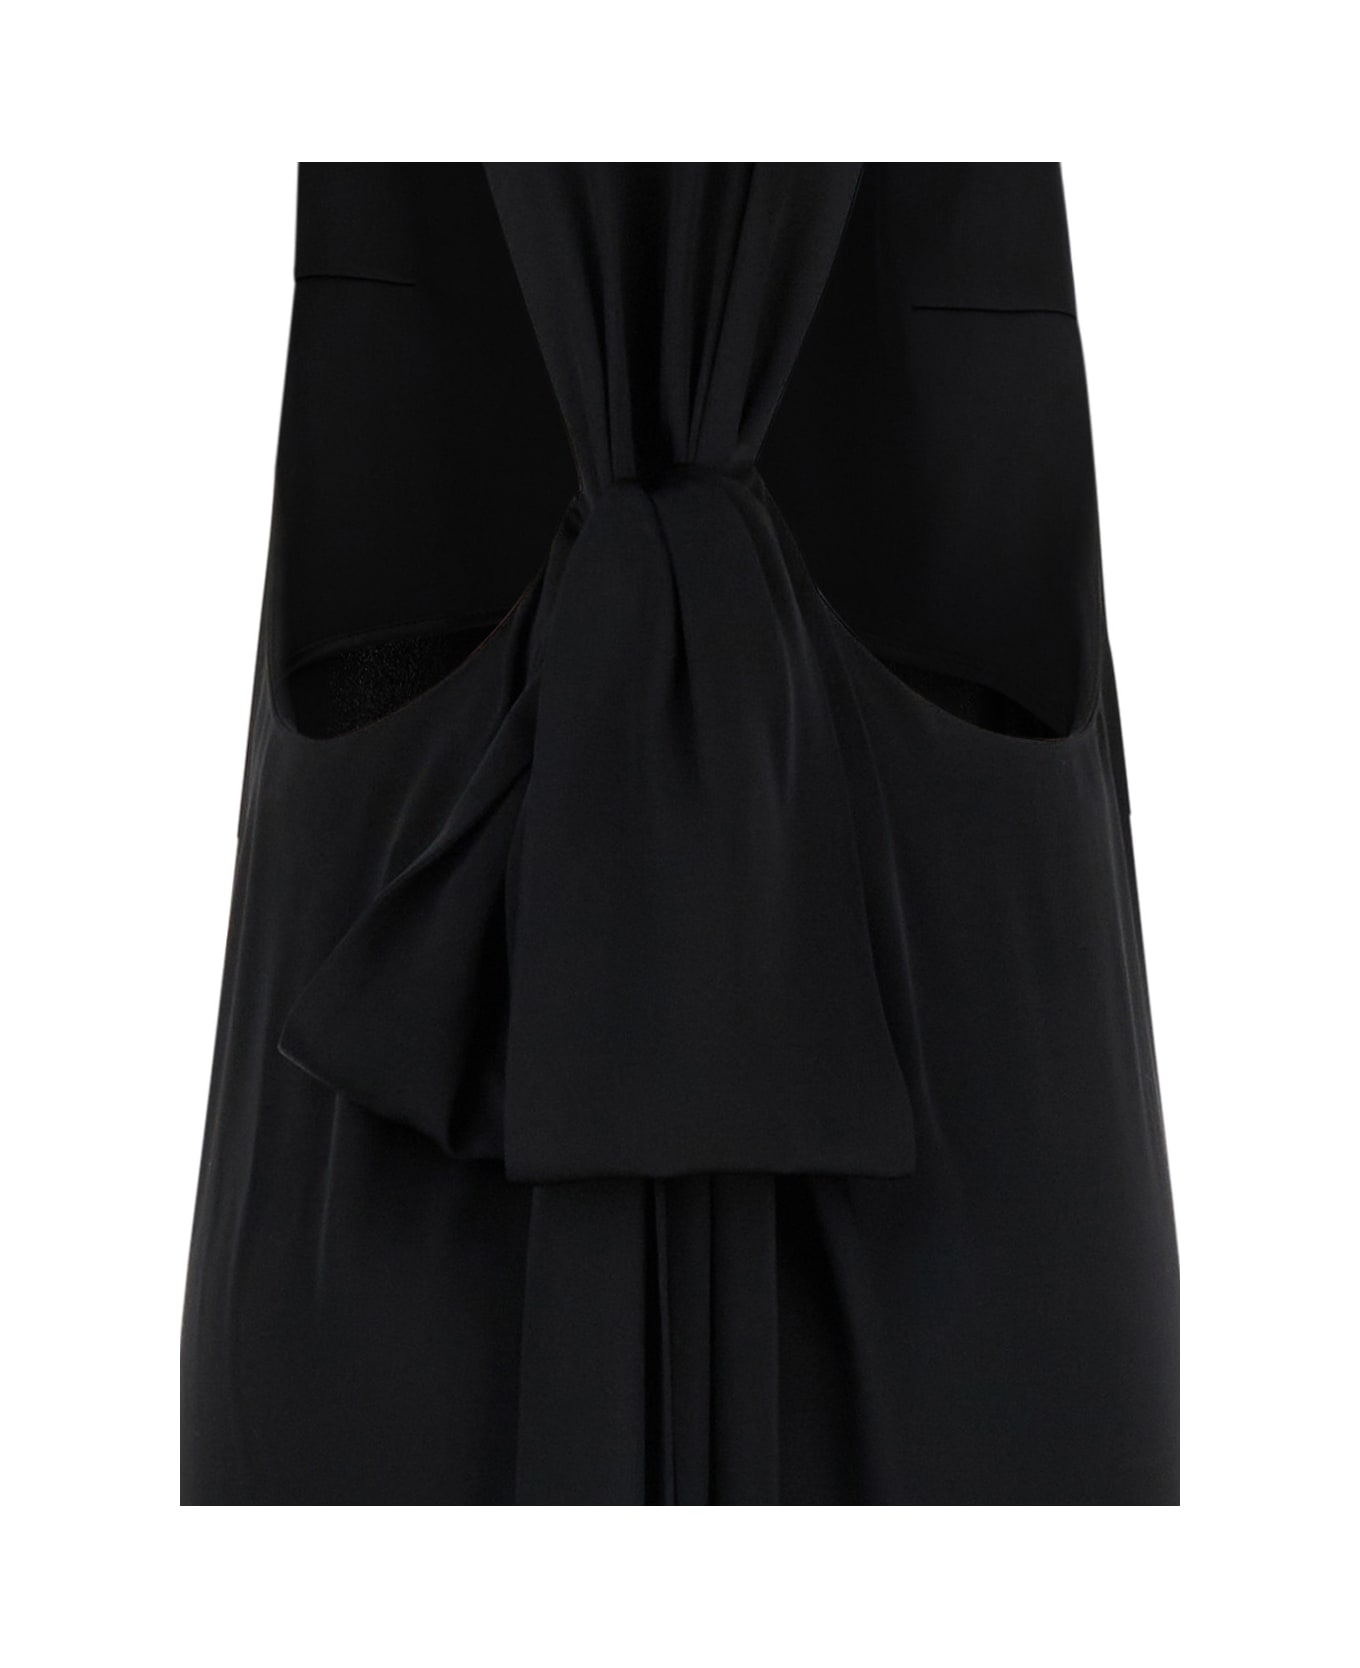 Saint Laurent Black Back-tie Dress In Satin Crepe Woman - Black